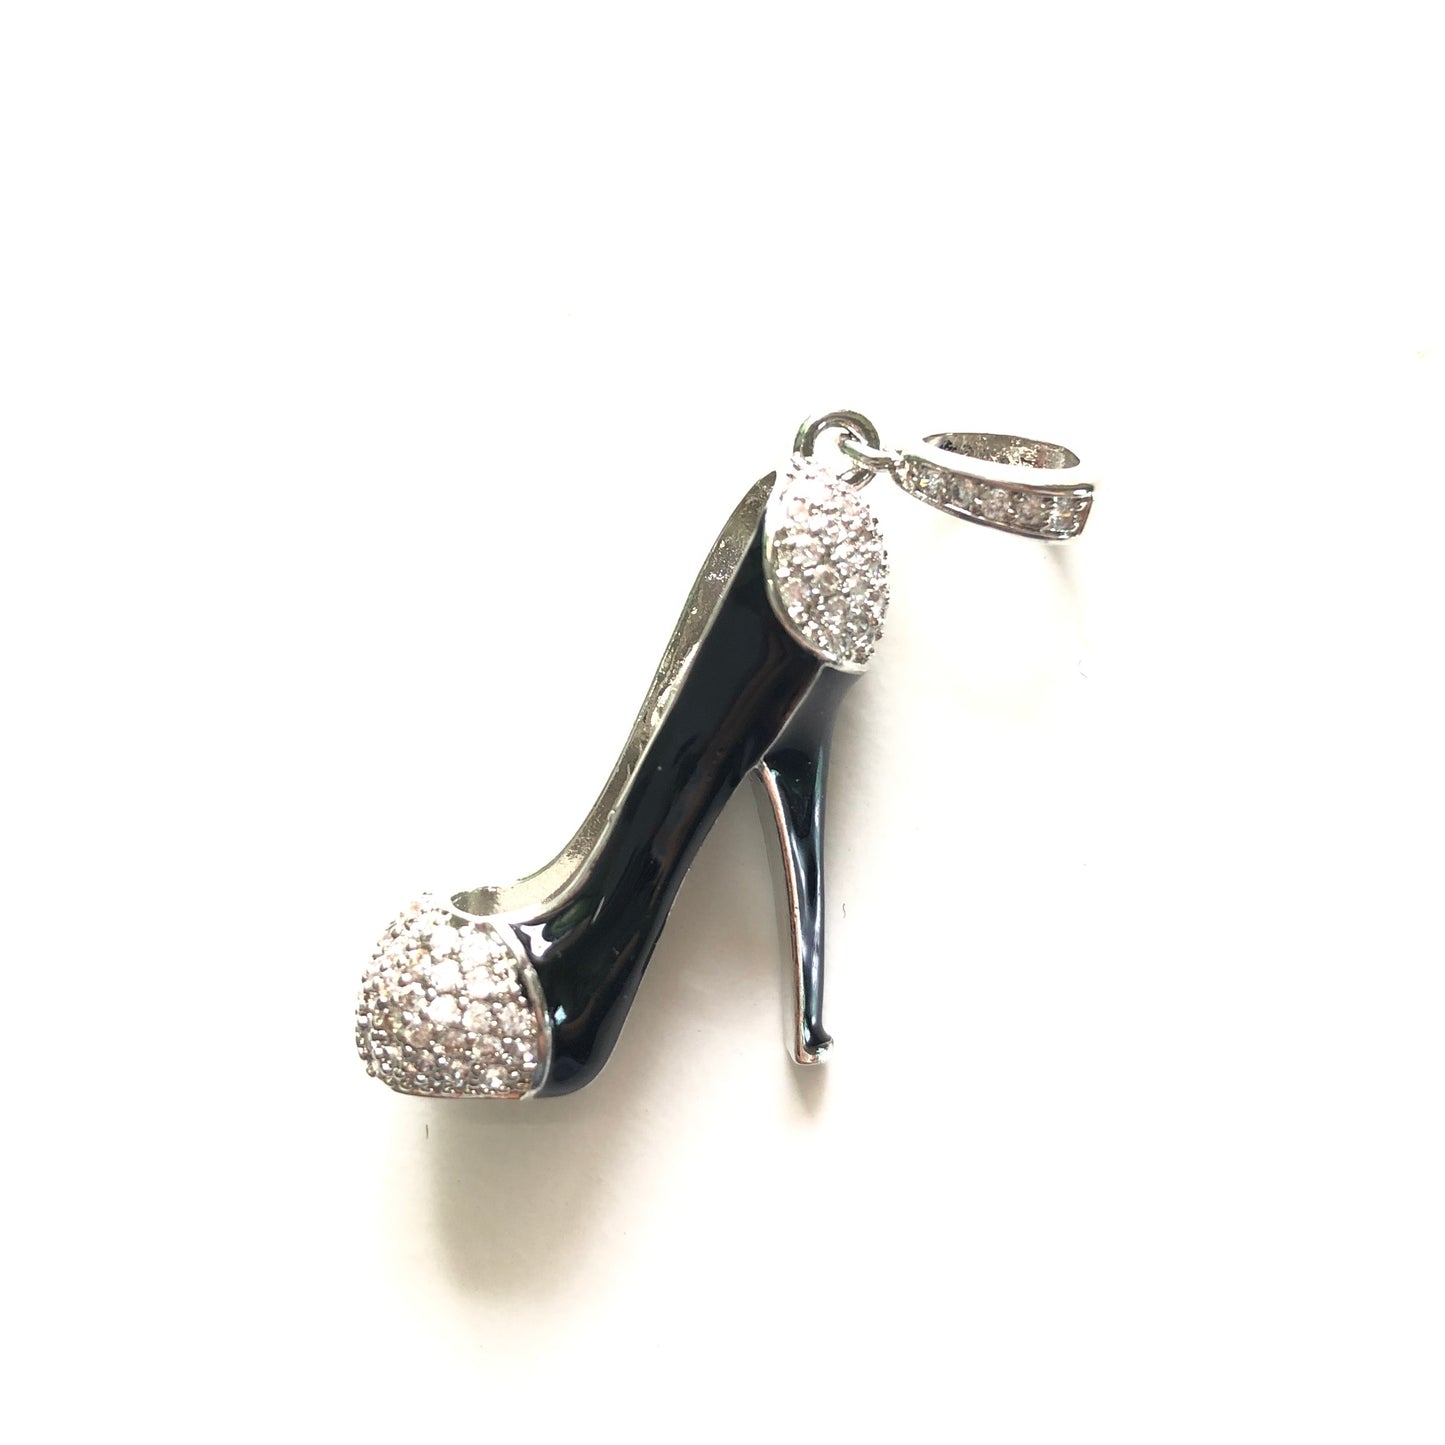 10pcs/lot 30*26mm CZ Paved Black High Heel Shoe Charms Silver CZ Paved Charms High Heels On Sale Charms Beads Beyond